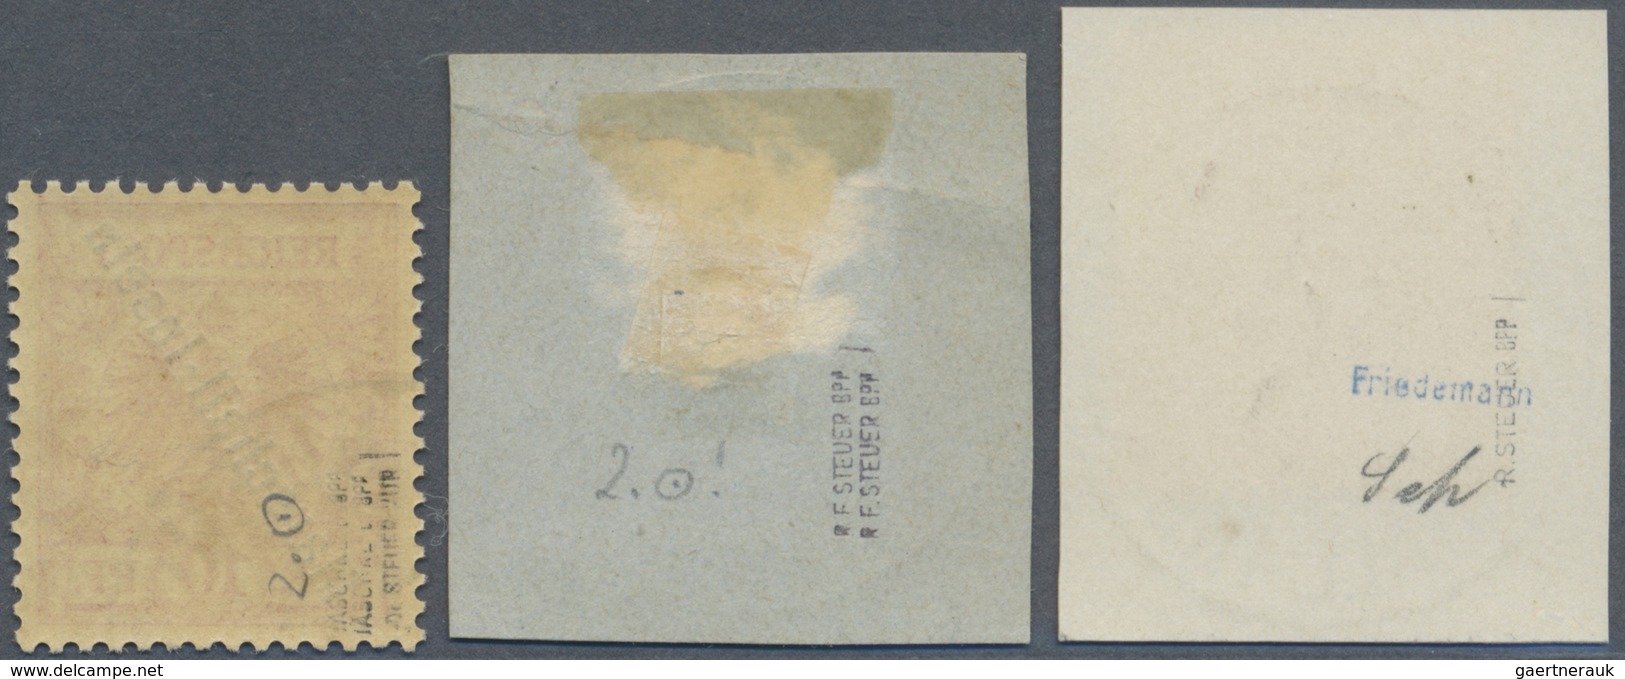 Brfst/O Deutsche Kolonien - Marshall-Inseln: 1897, 10 Pfg. Lilarot, Drei Werte Je Entwertet "JALUIT MARSHALL - Isole Marshall